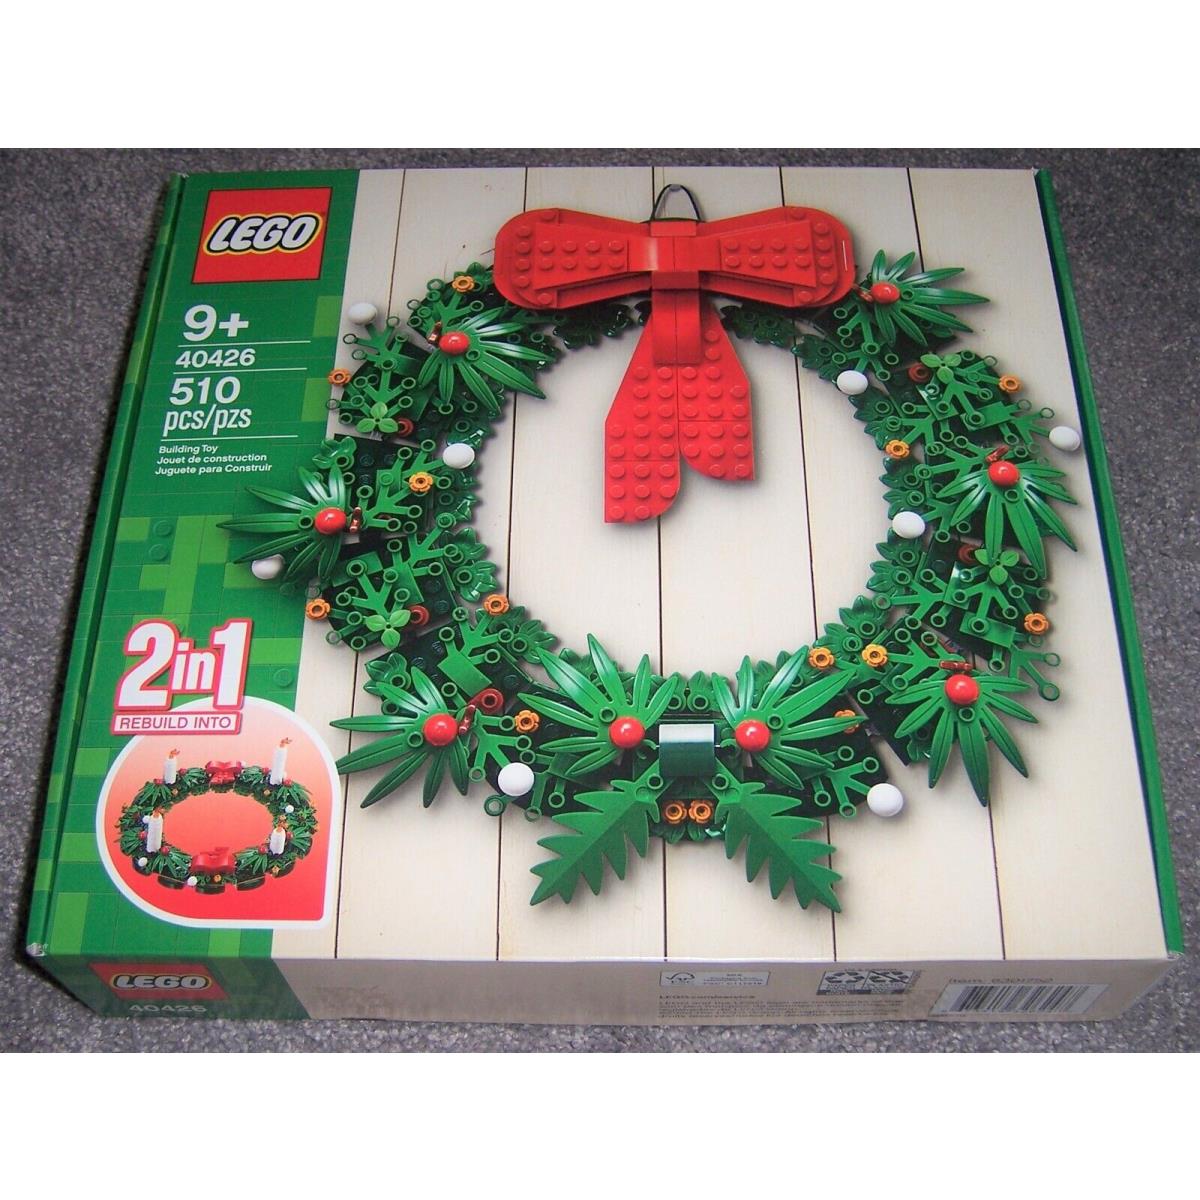 Lego Creator 2 in 1 Christmas Wreath 40426 Holiday Christmas Building Set